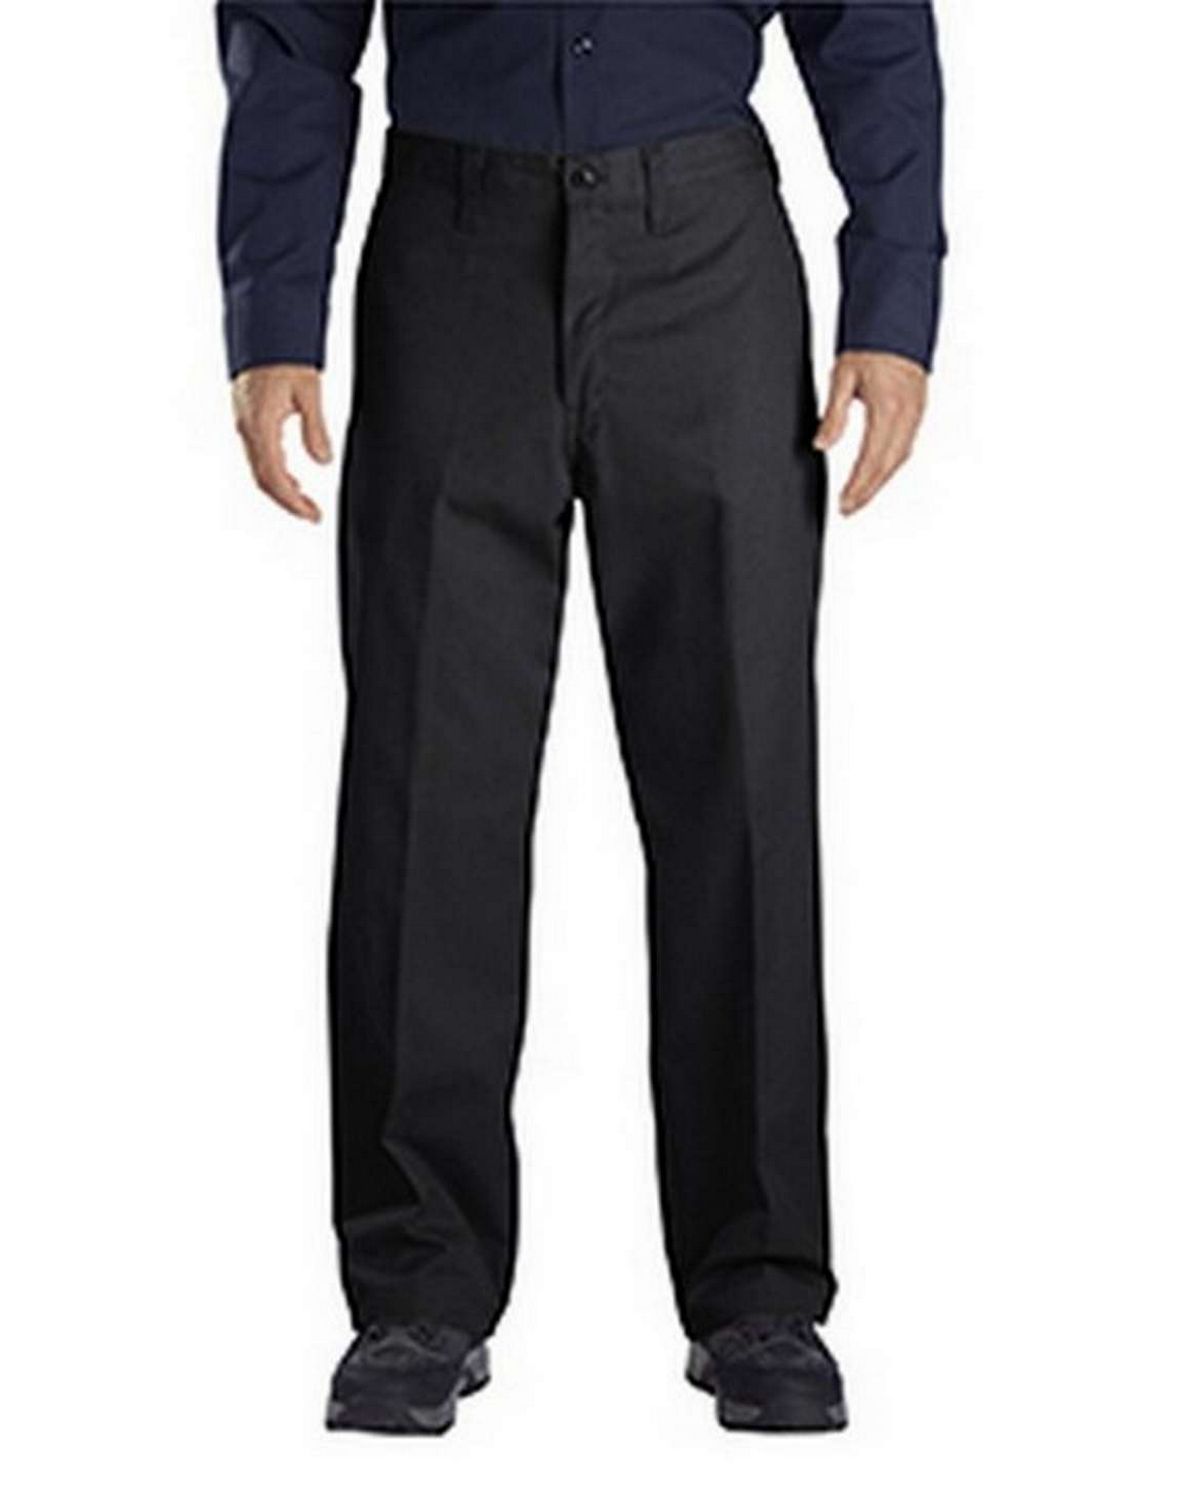 Buy Louis Philippe Men Grey Slim Fit Formal Trousers - Trousers for Men  19447256 | Myntra